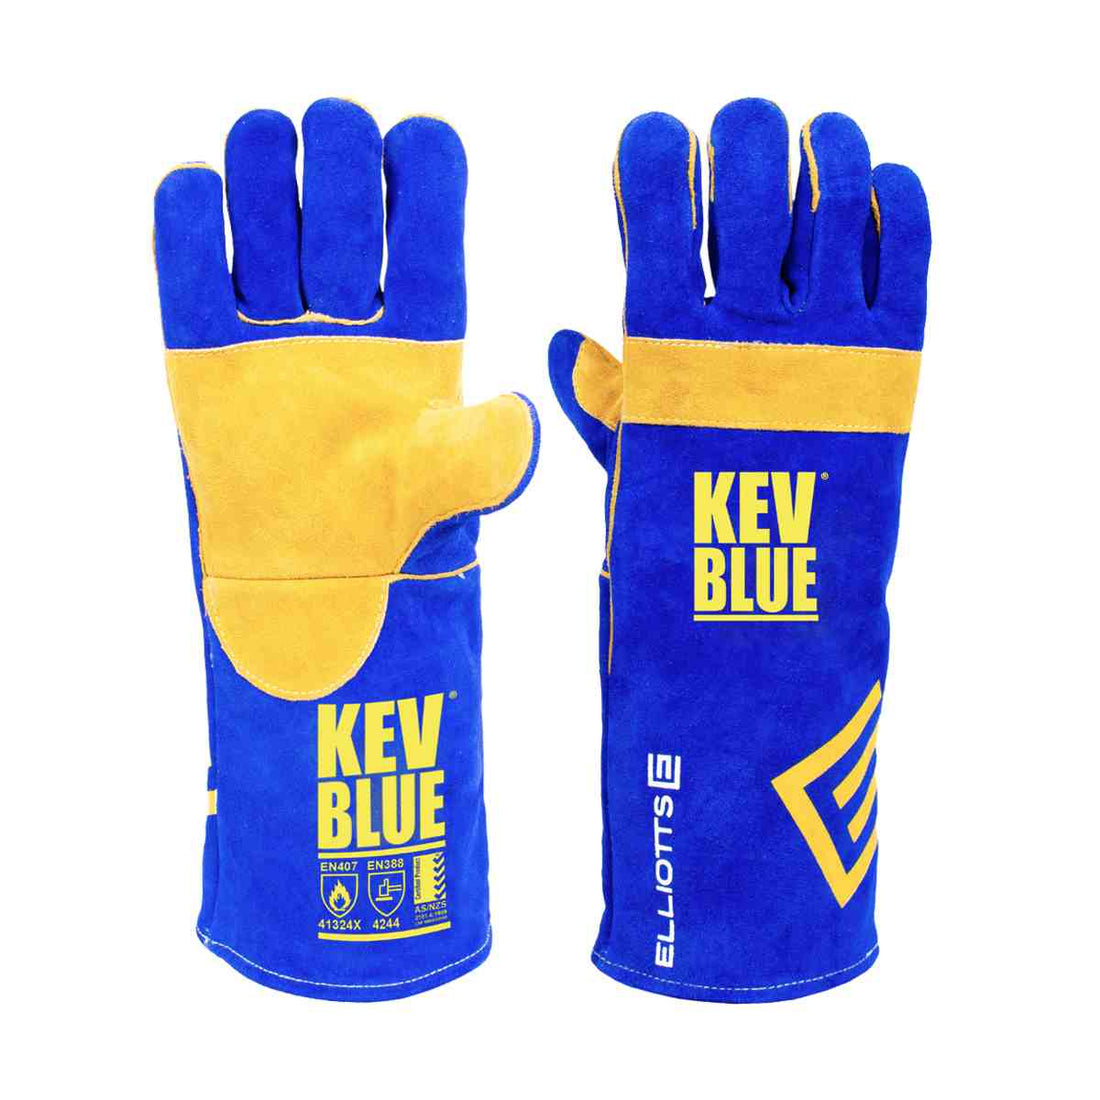 Elliotts Kev Blue Double Palm Welding Gloves 10PK 300RKB